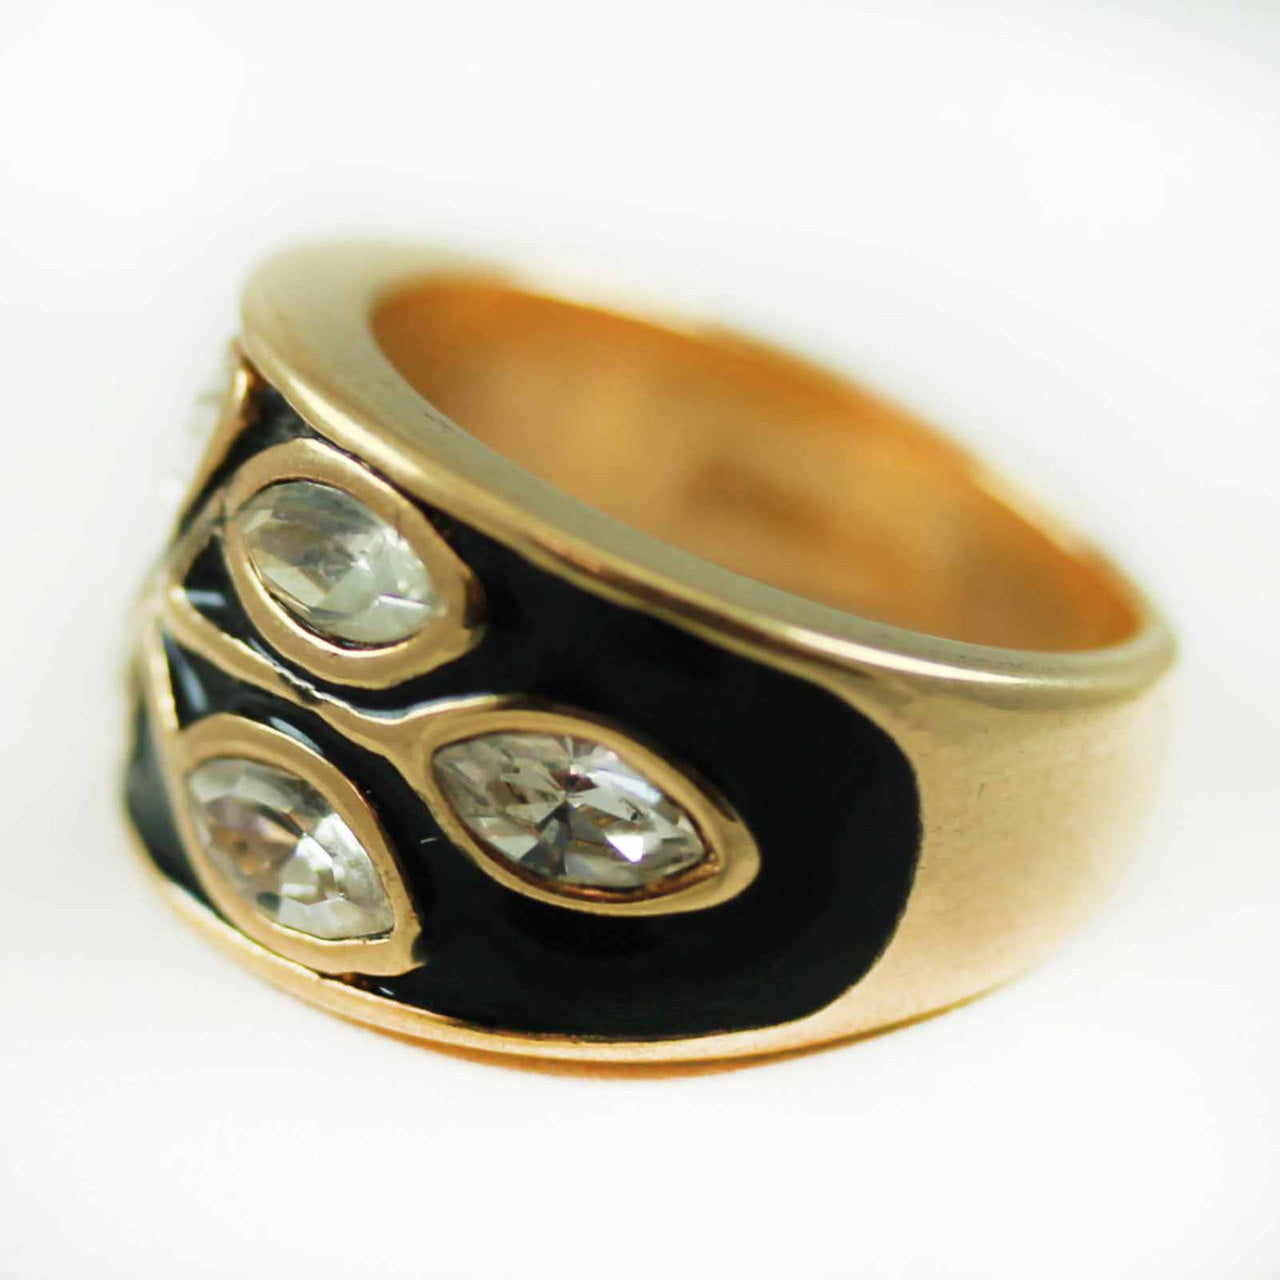 Vintage 1980's Black Enamel Ring with Clear Austrian Crystals Leaf Motif 18k Gold Plated